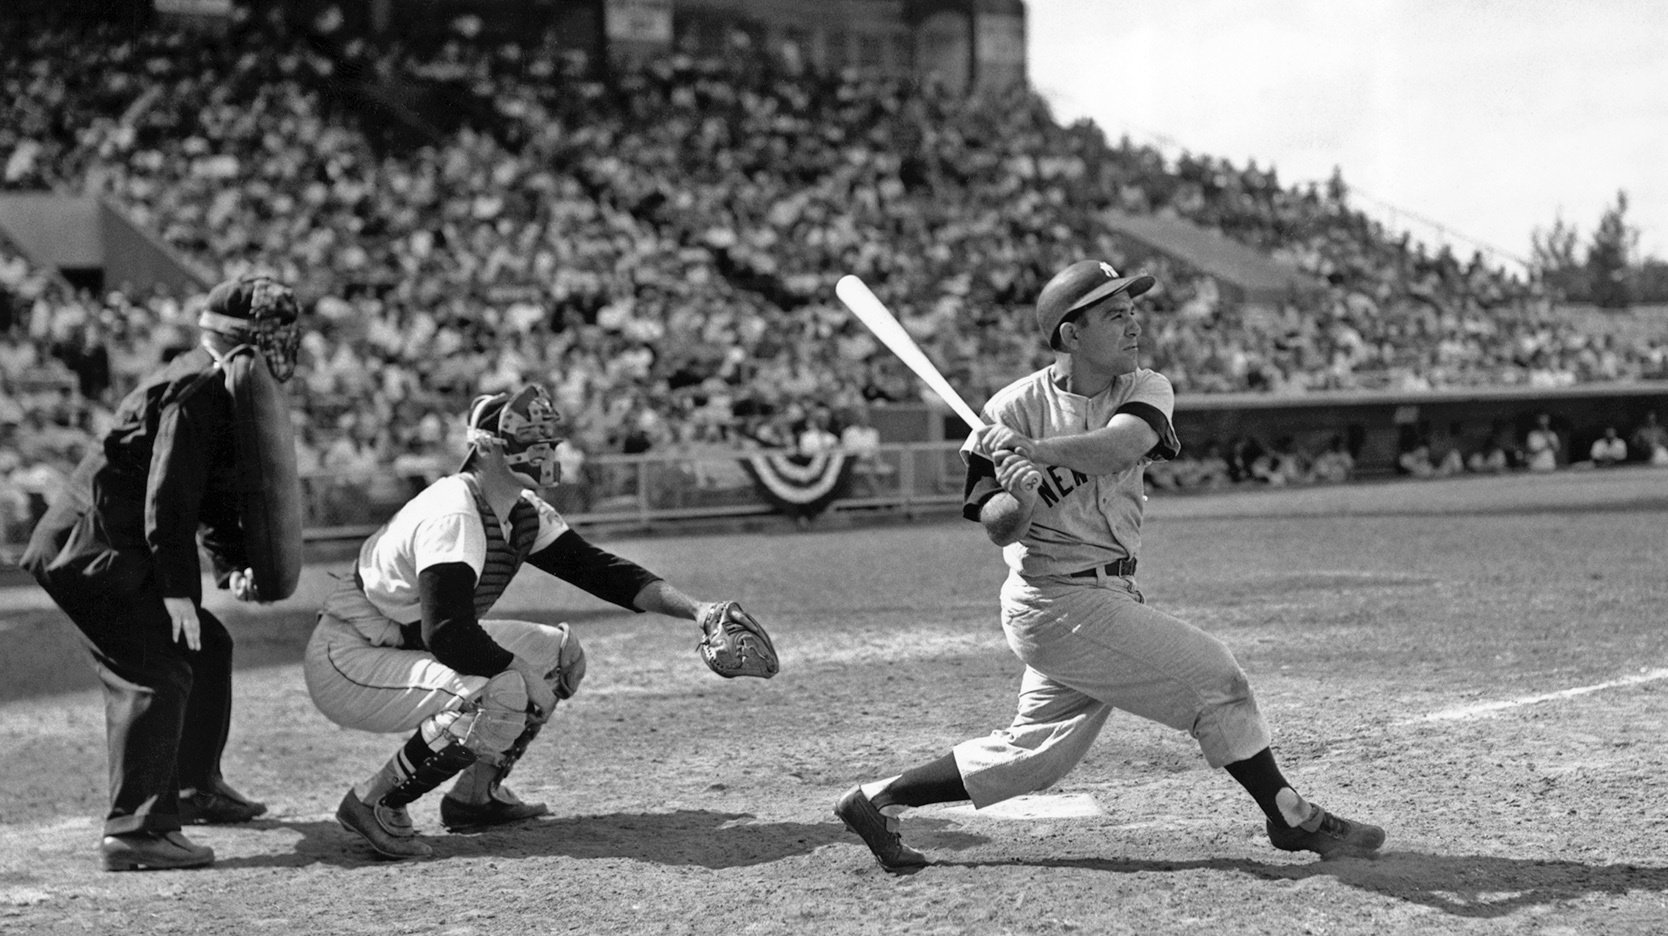 Yogi Berra of the Yankees Miami Stadium 1959